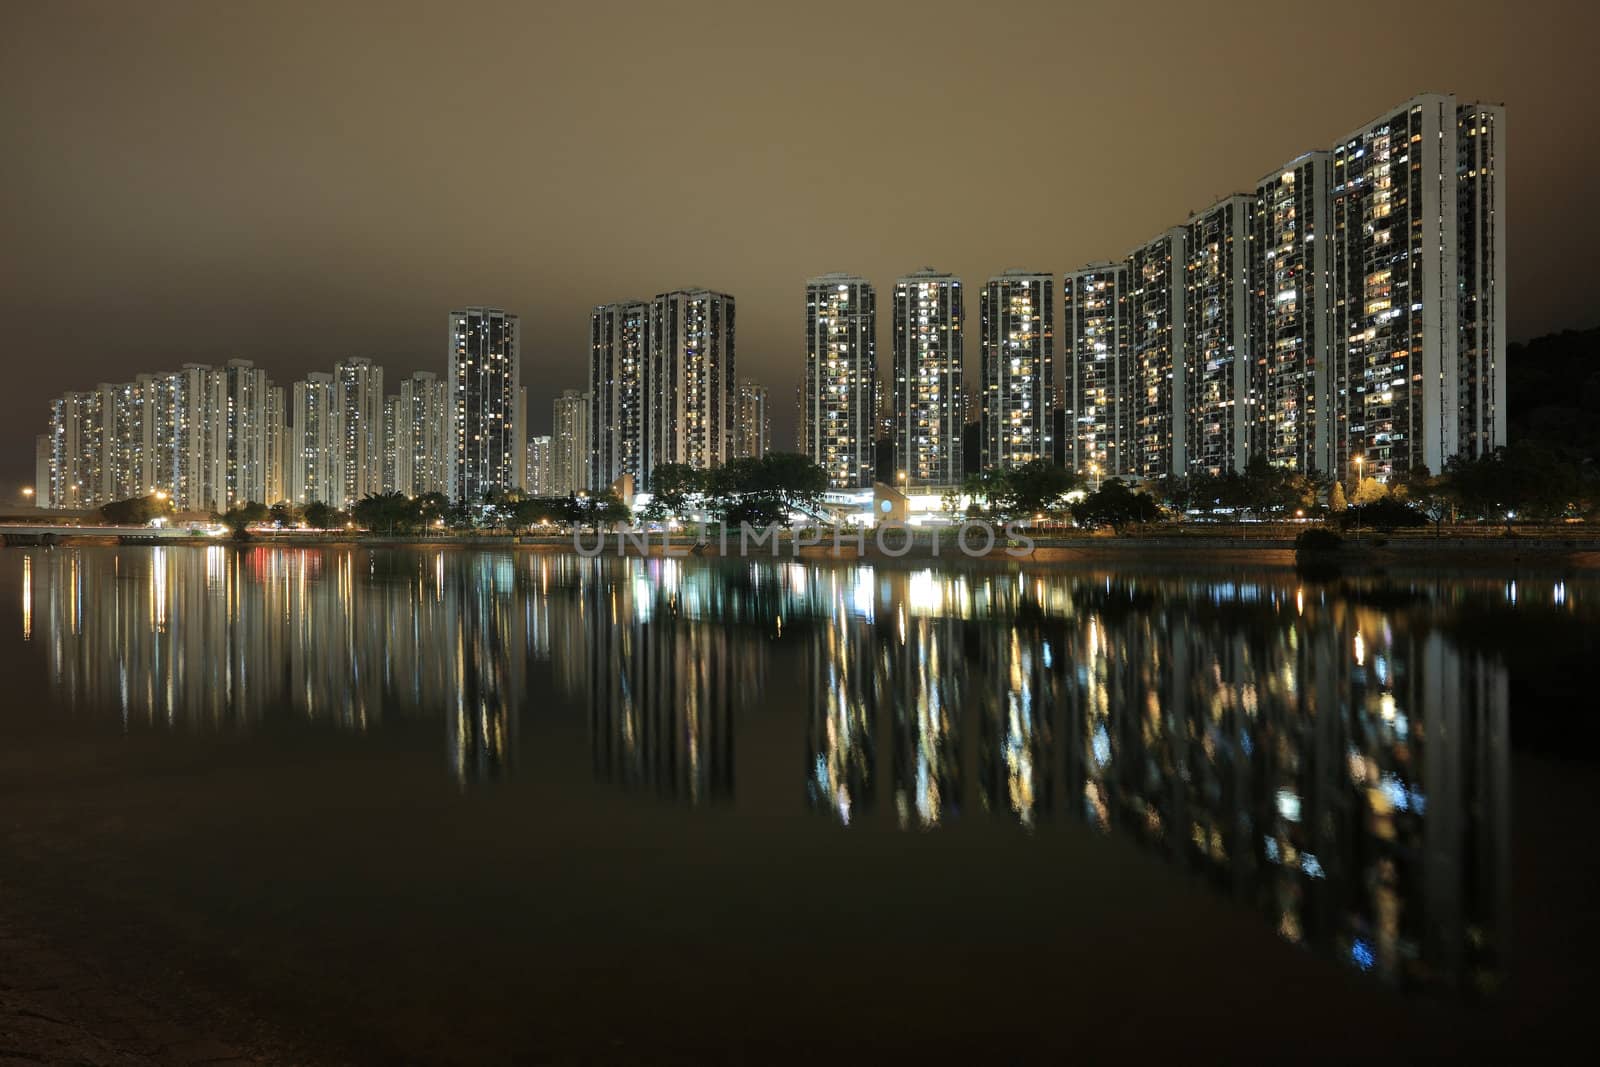 Hong Kong public housing and river